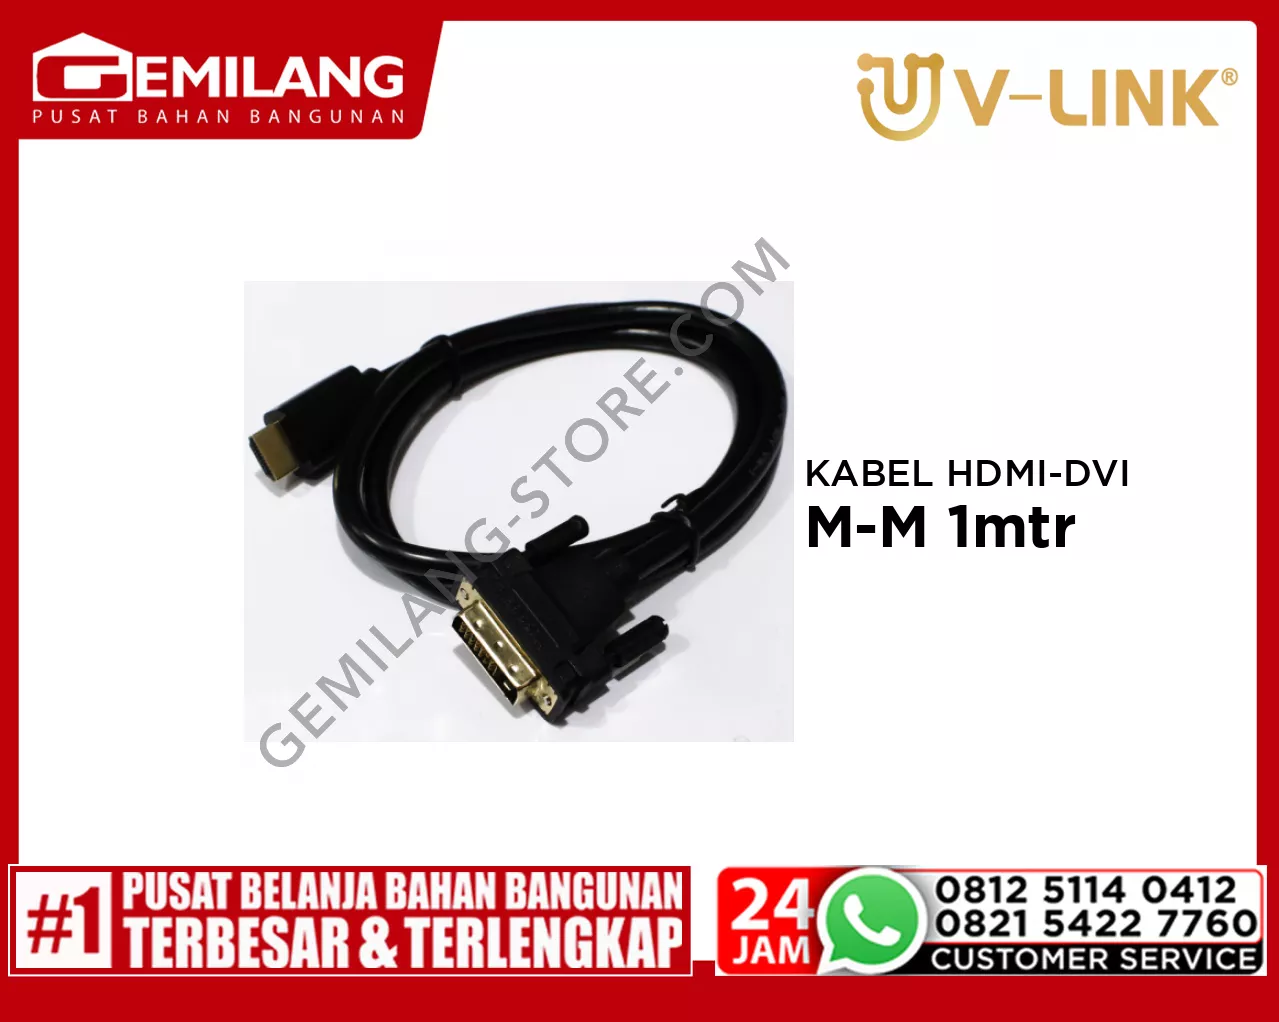 V-LINK KABEL HDMI TO DVI 24 + 1 MALE TO MALE HITAM VEGGIEG 1mtr